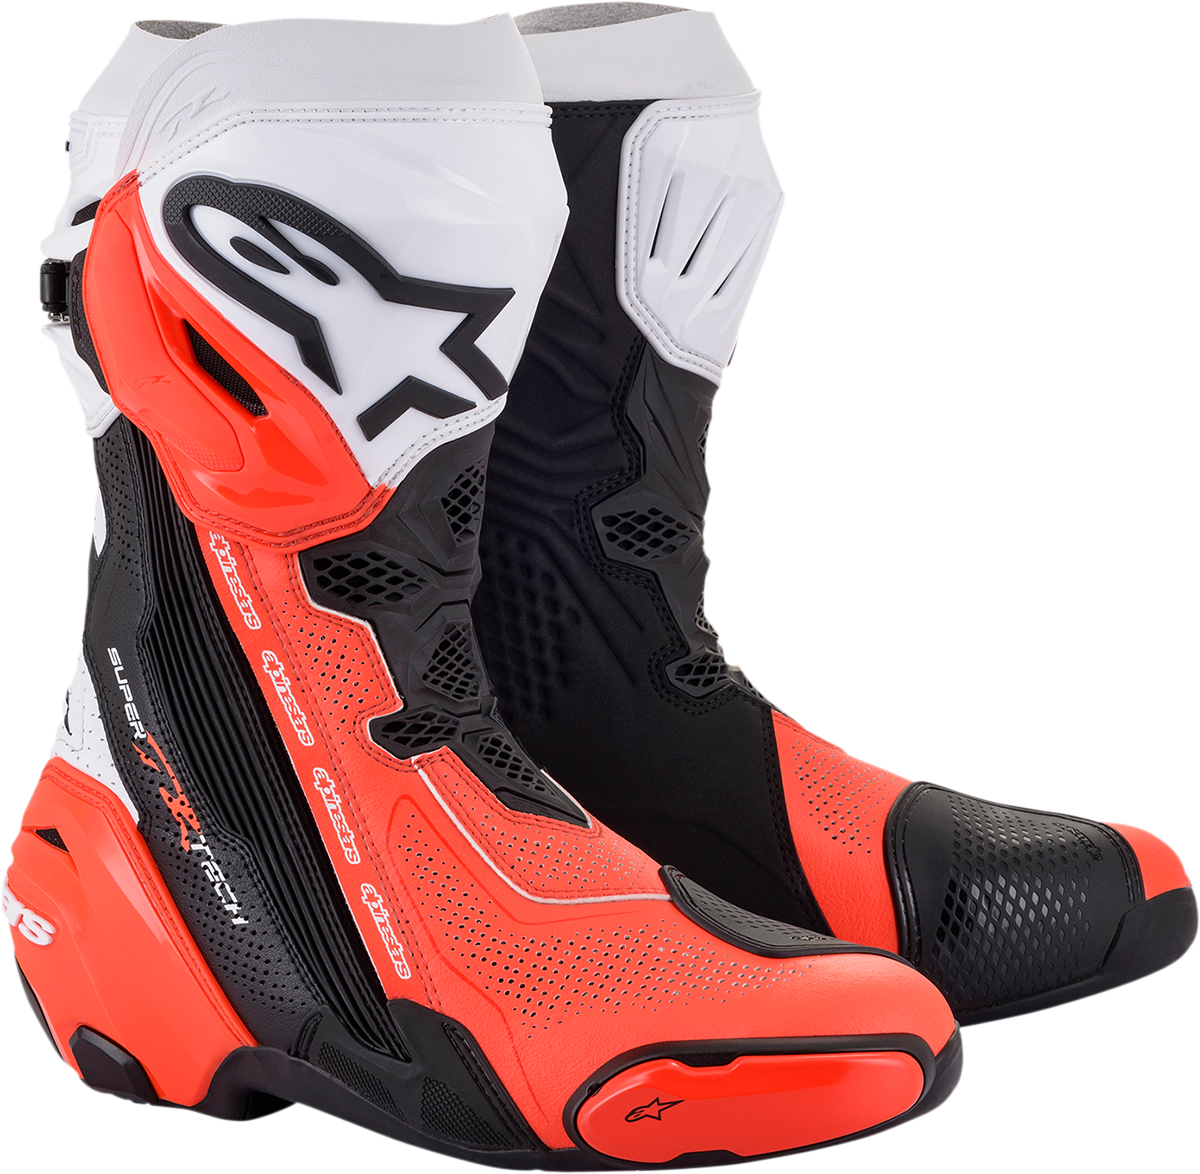 ALPINESTARS Supertech V Boots - Black/Fluo Red/White - US 12.5 / EU 48 2220121-124-48